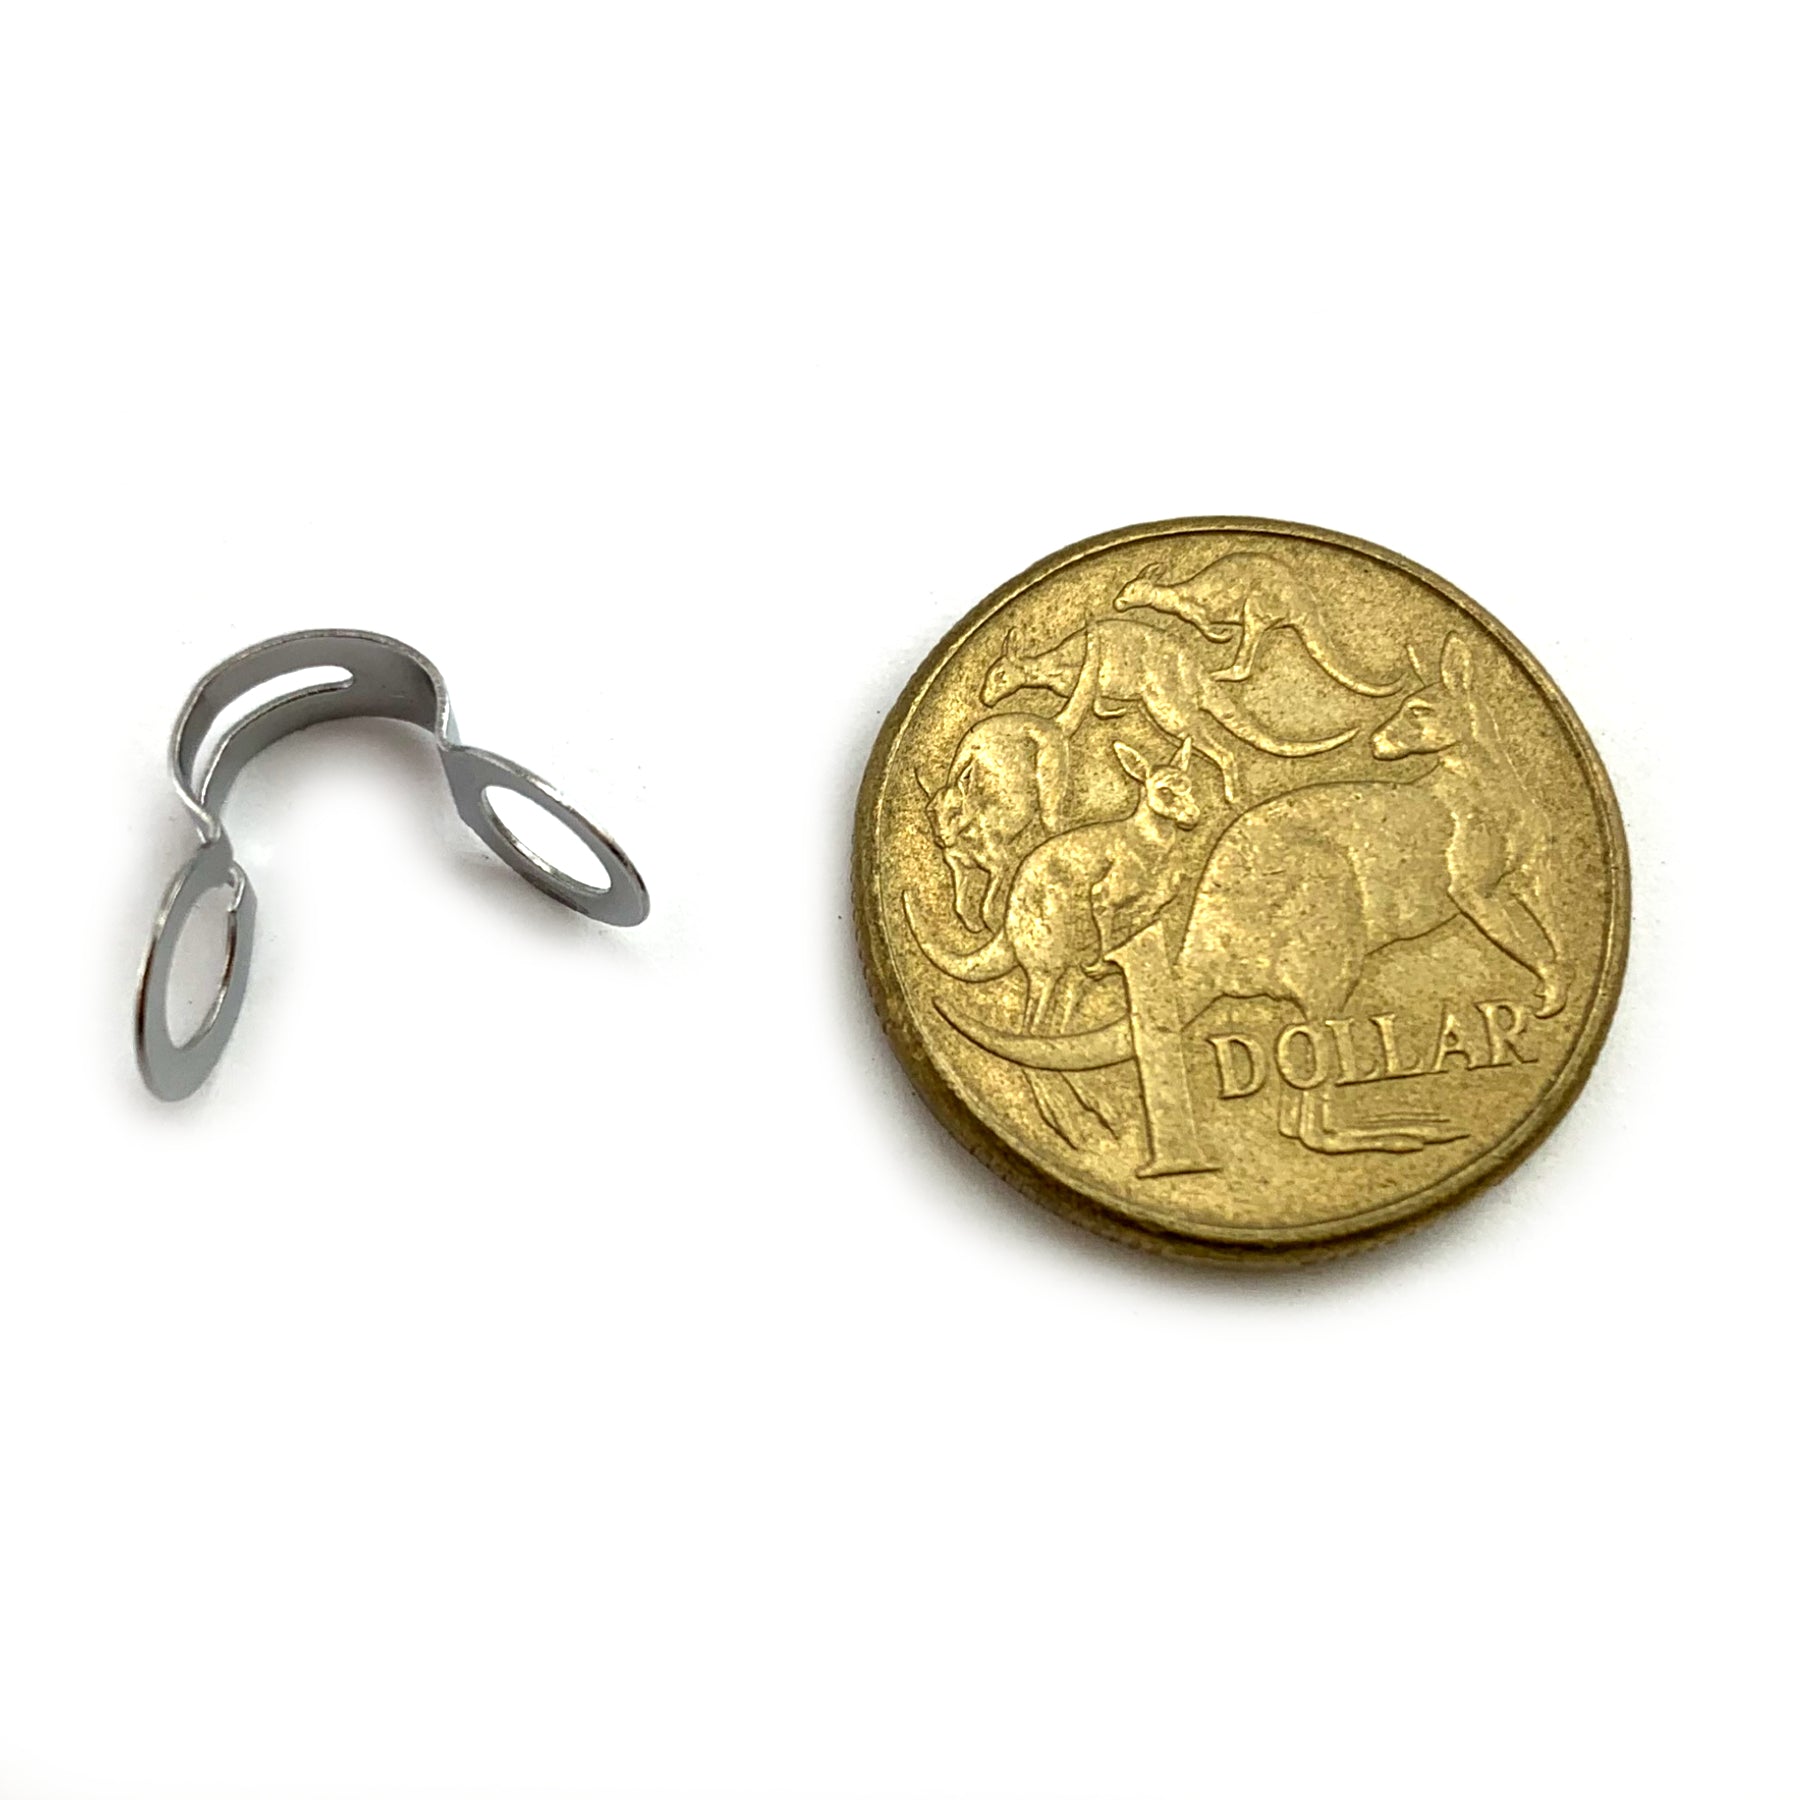 Chrome Ball Chain End clips, size 4.5mm. Australia